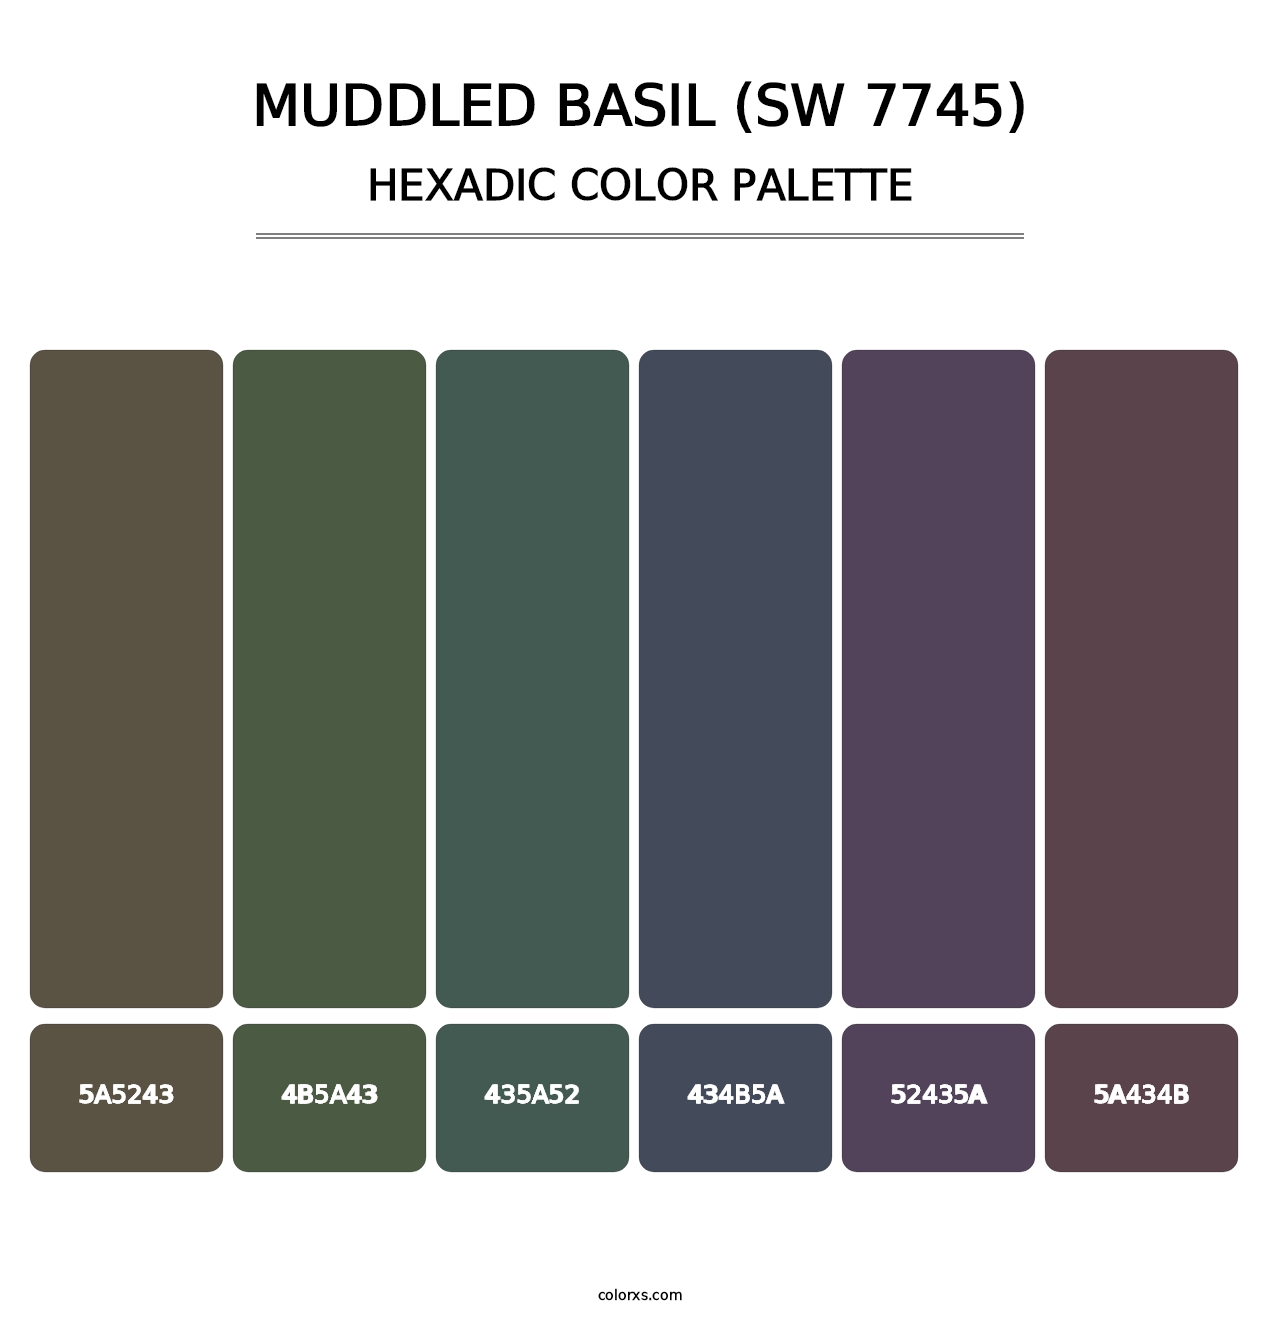 Muddled Basil (SW 7745) - Hexadic Color Palette